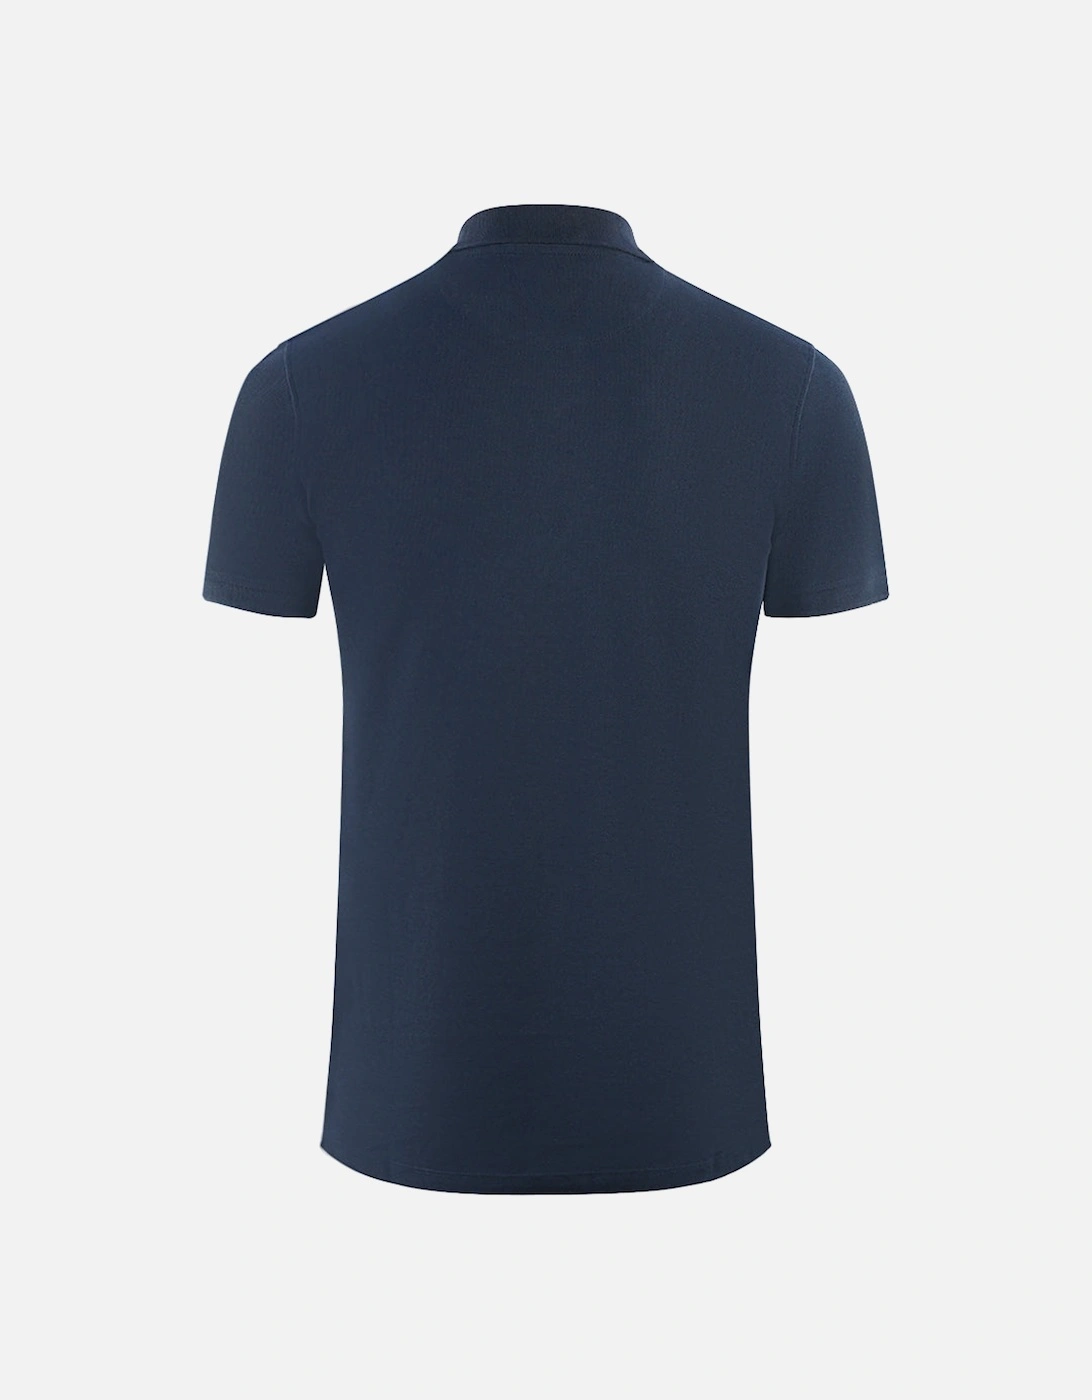 London Classic Navy Blue Polo Shirt